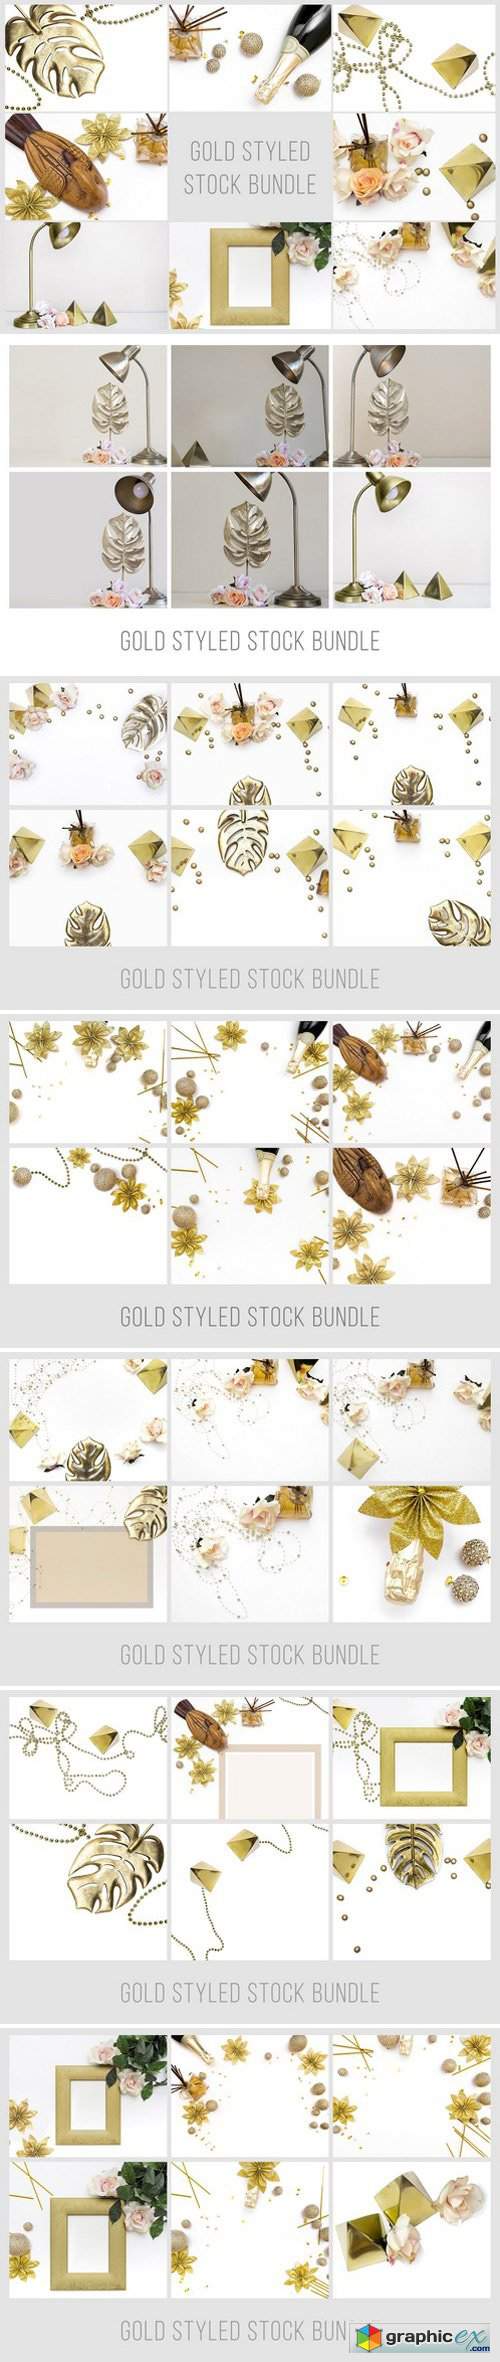 Gold Styled Stock Bundle 2228406